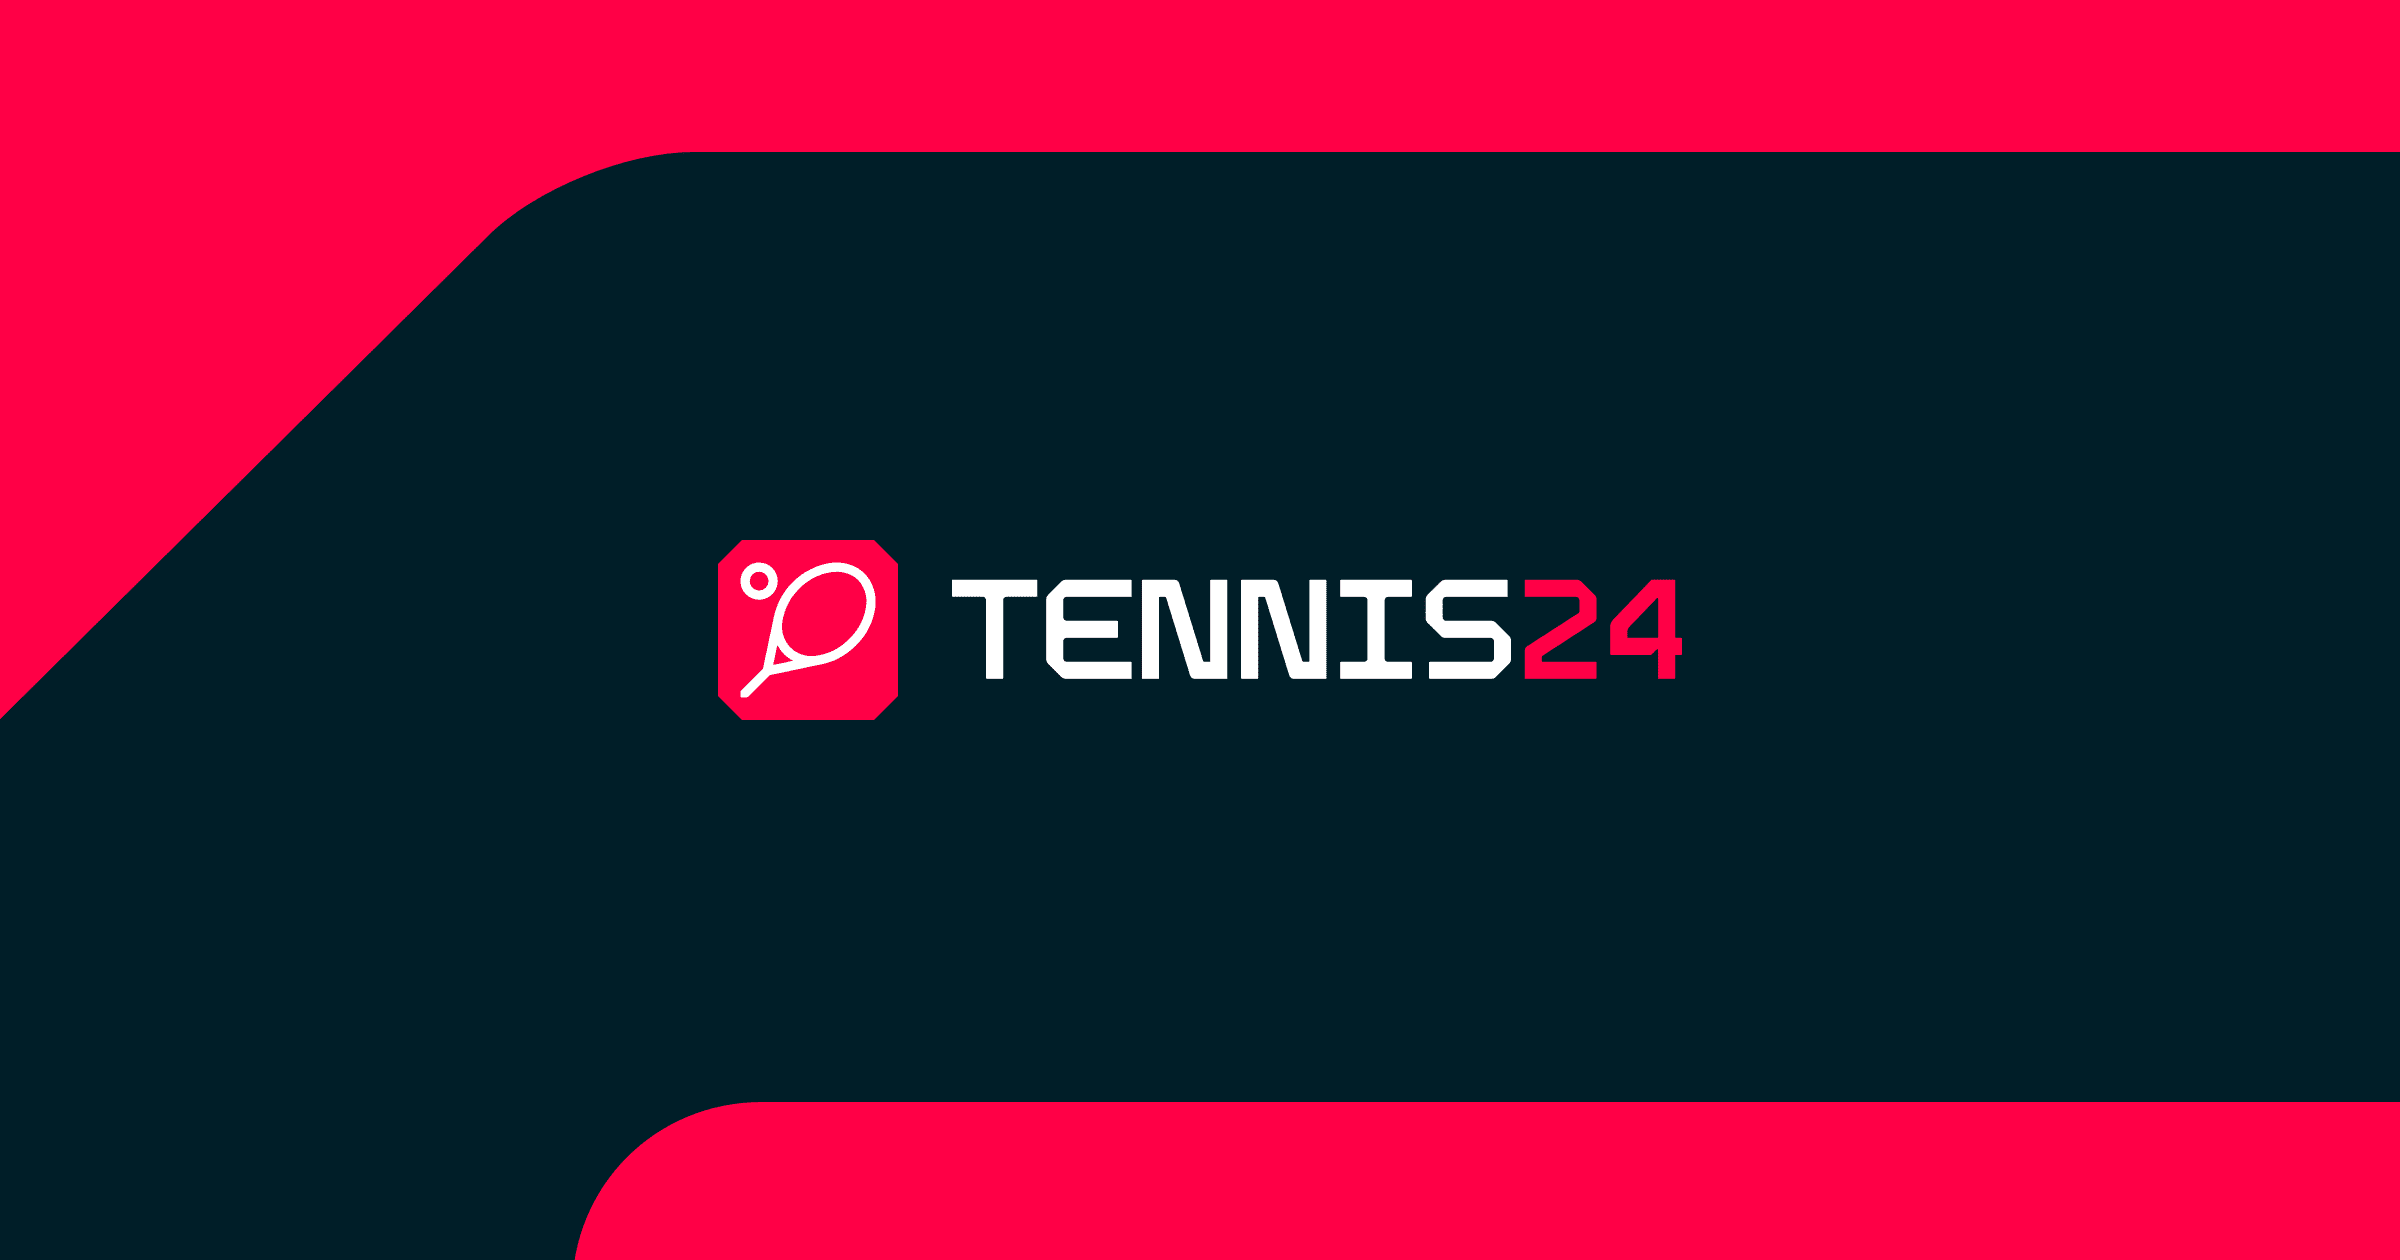 Tennis Live Scores, News, Videos, Player Rankings